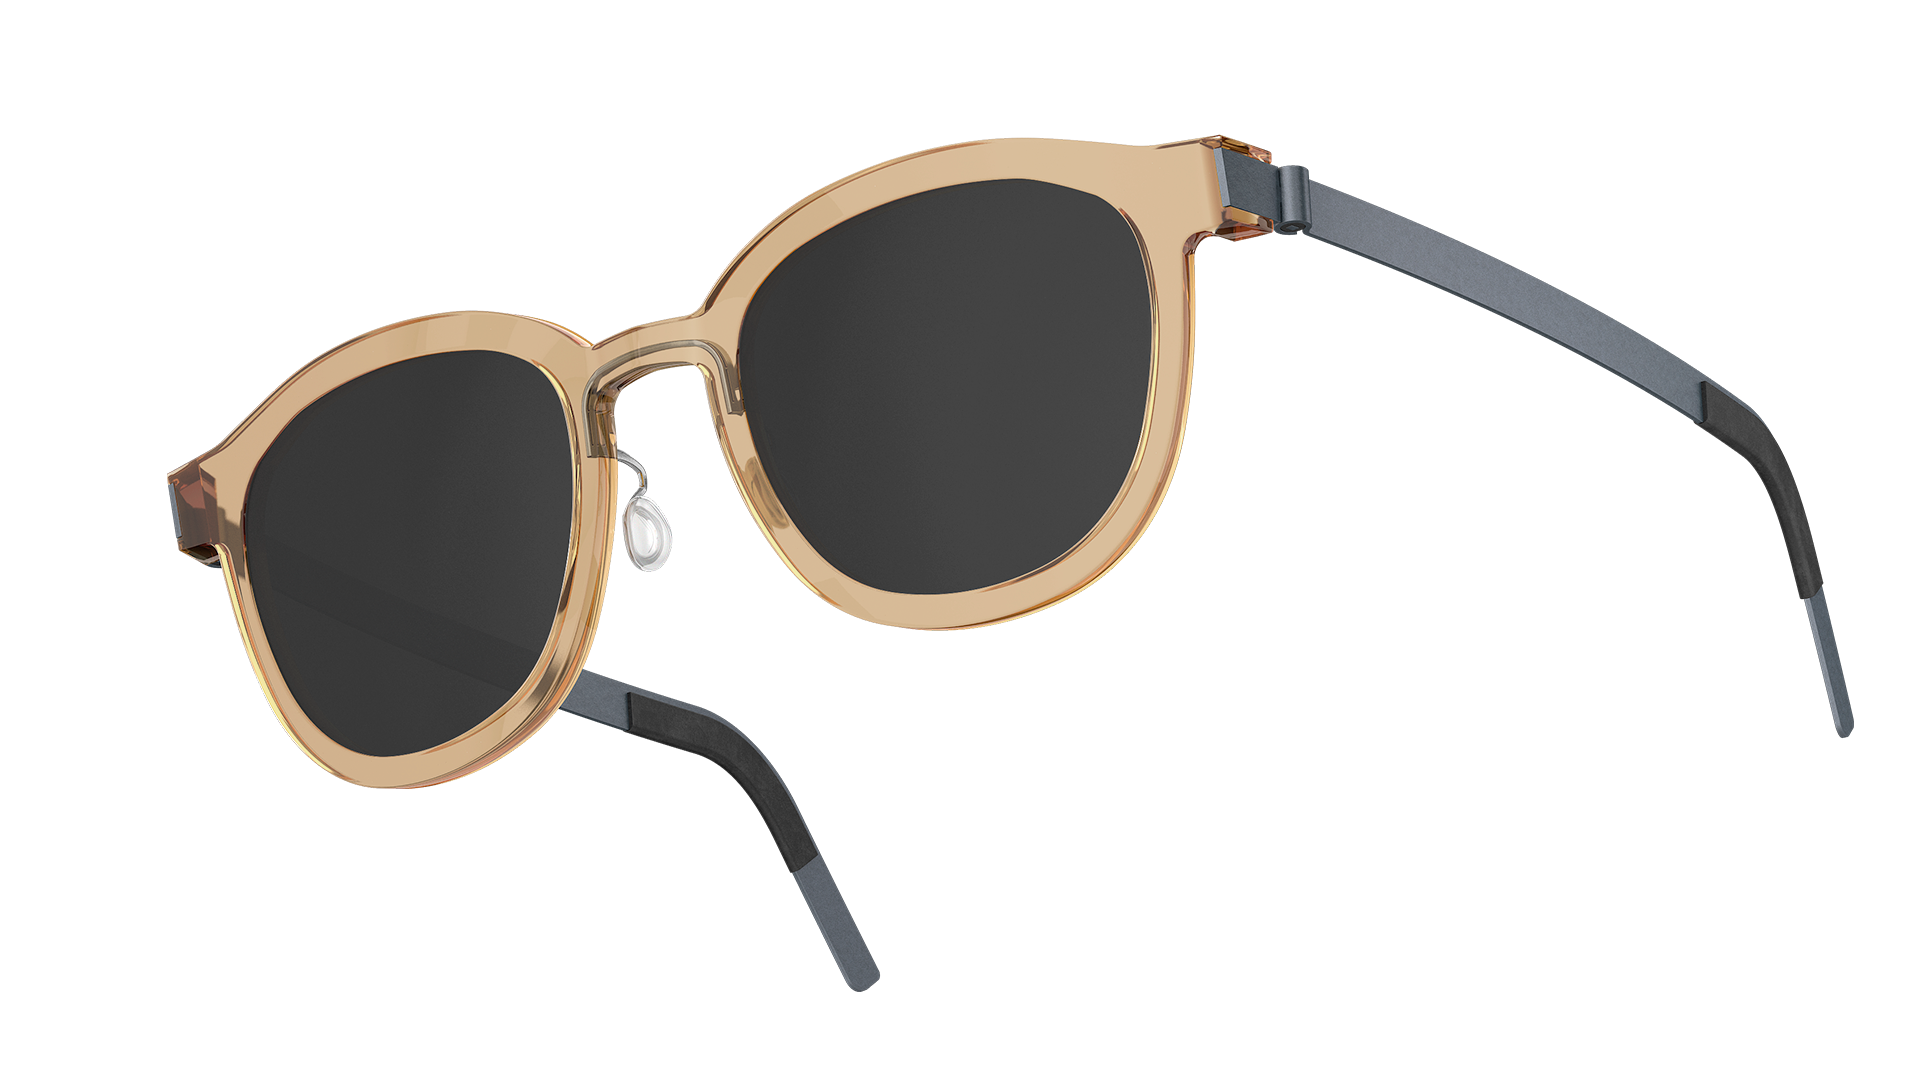 LINDBERG Model 8590 transparent frame panto shape sunglasses with temples made of titanium